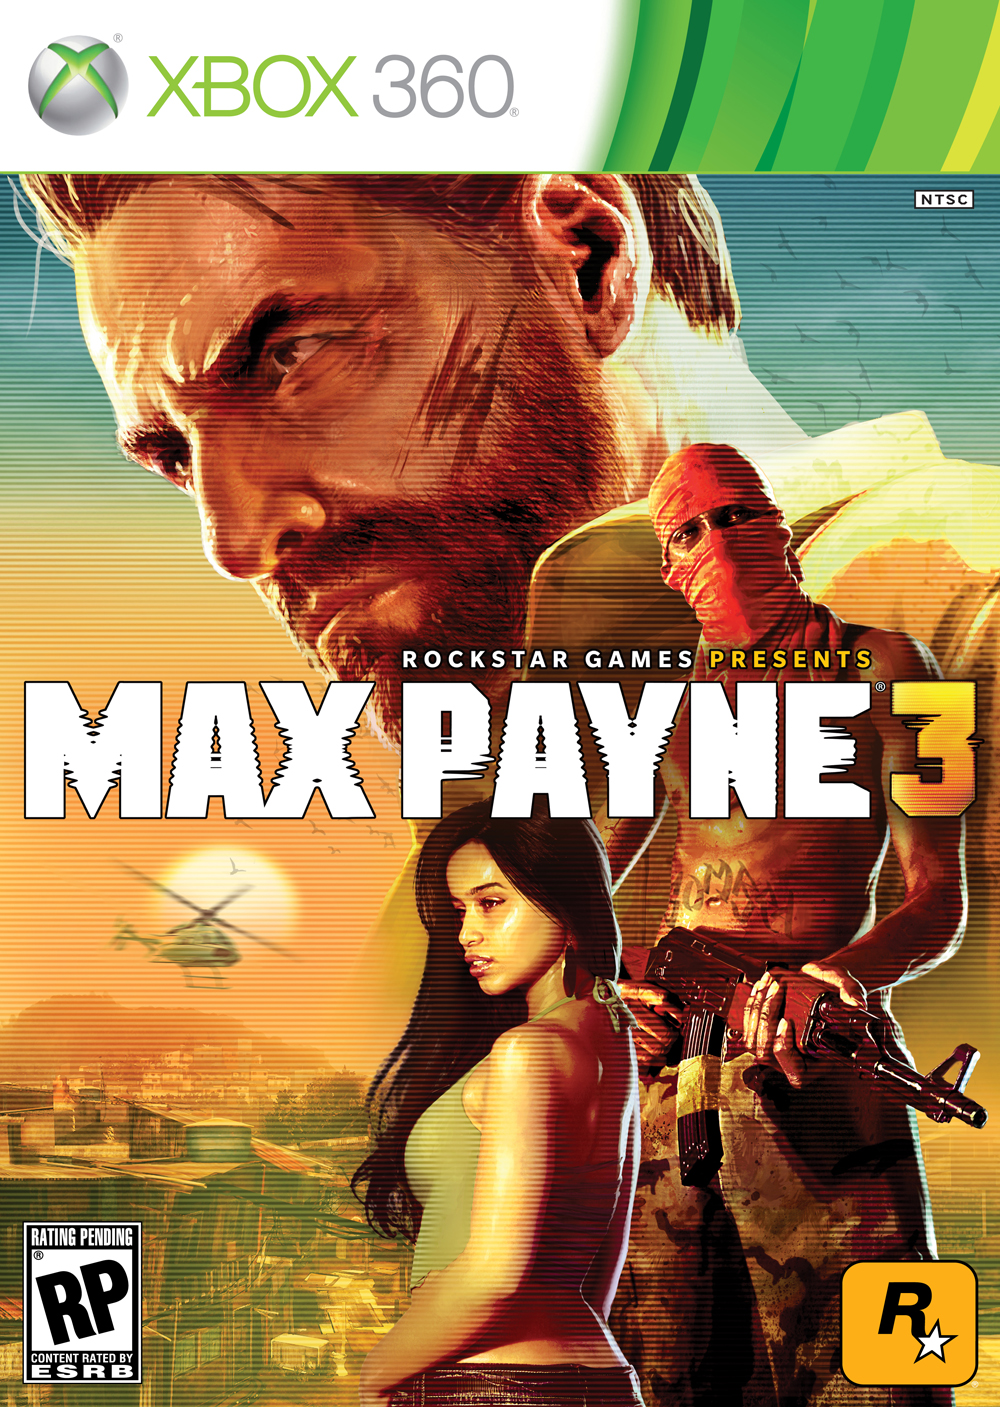 XBOX 360 - Max Payne 3